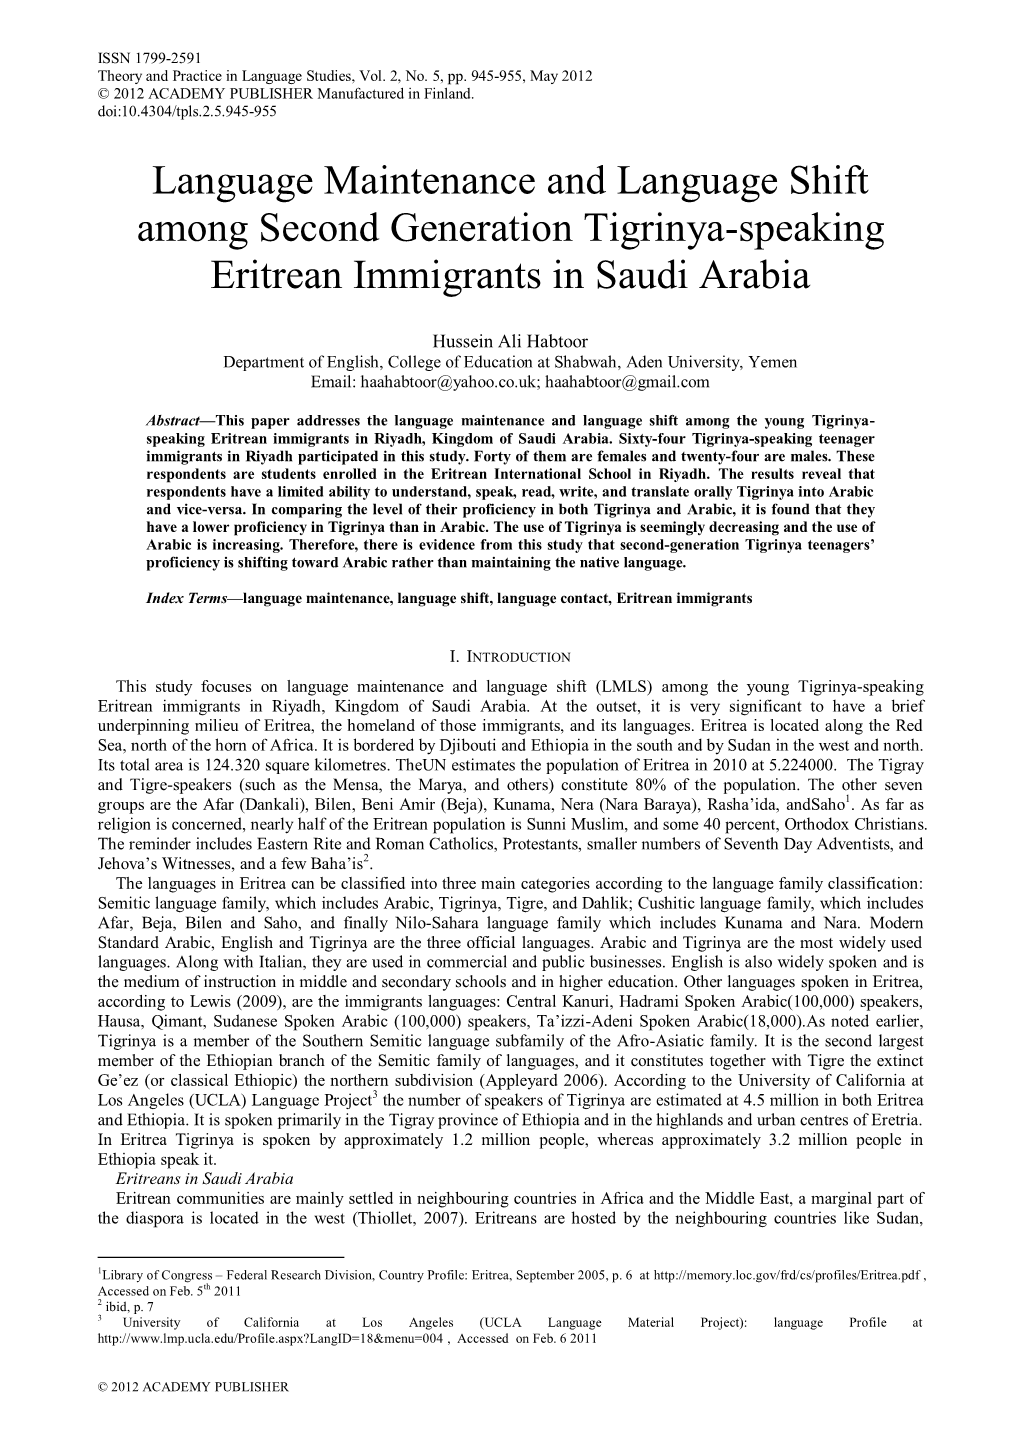 Language Maintenance and Language Shift Among Second Generation Tigrinya-Speaking Eritrean Immigrants in Saudi Arabia